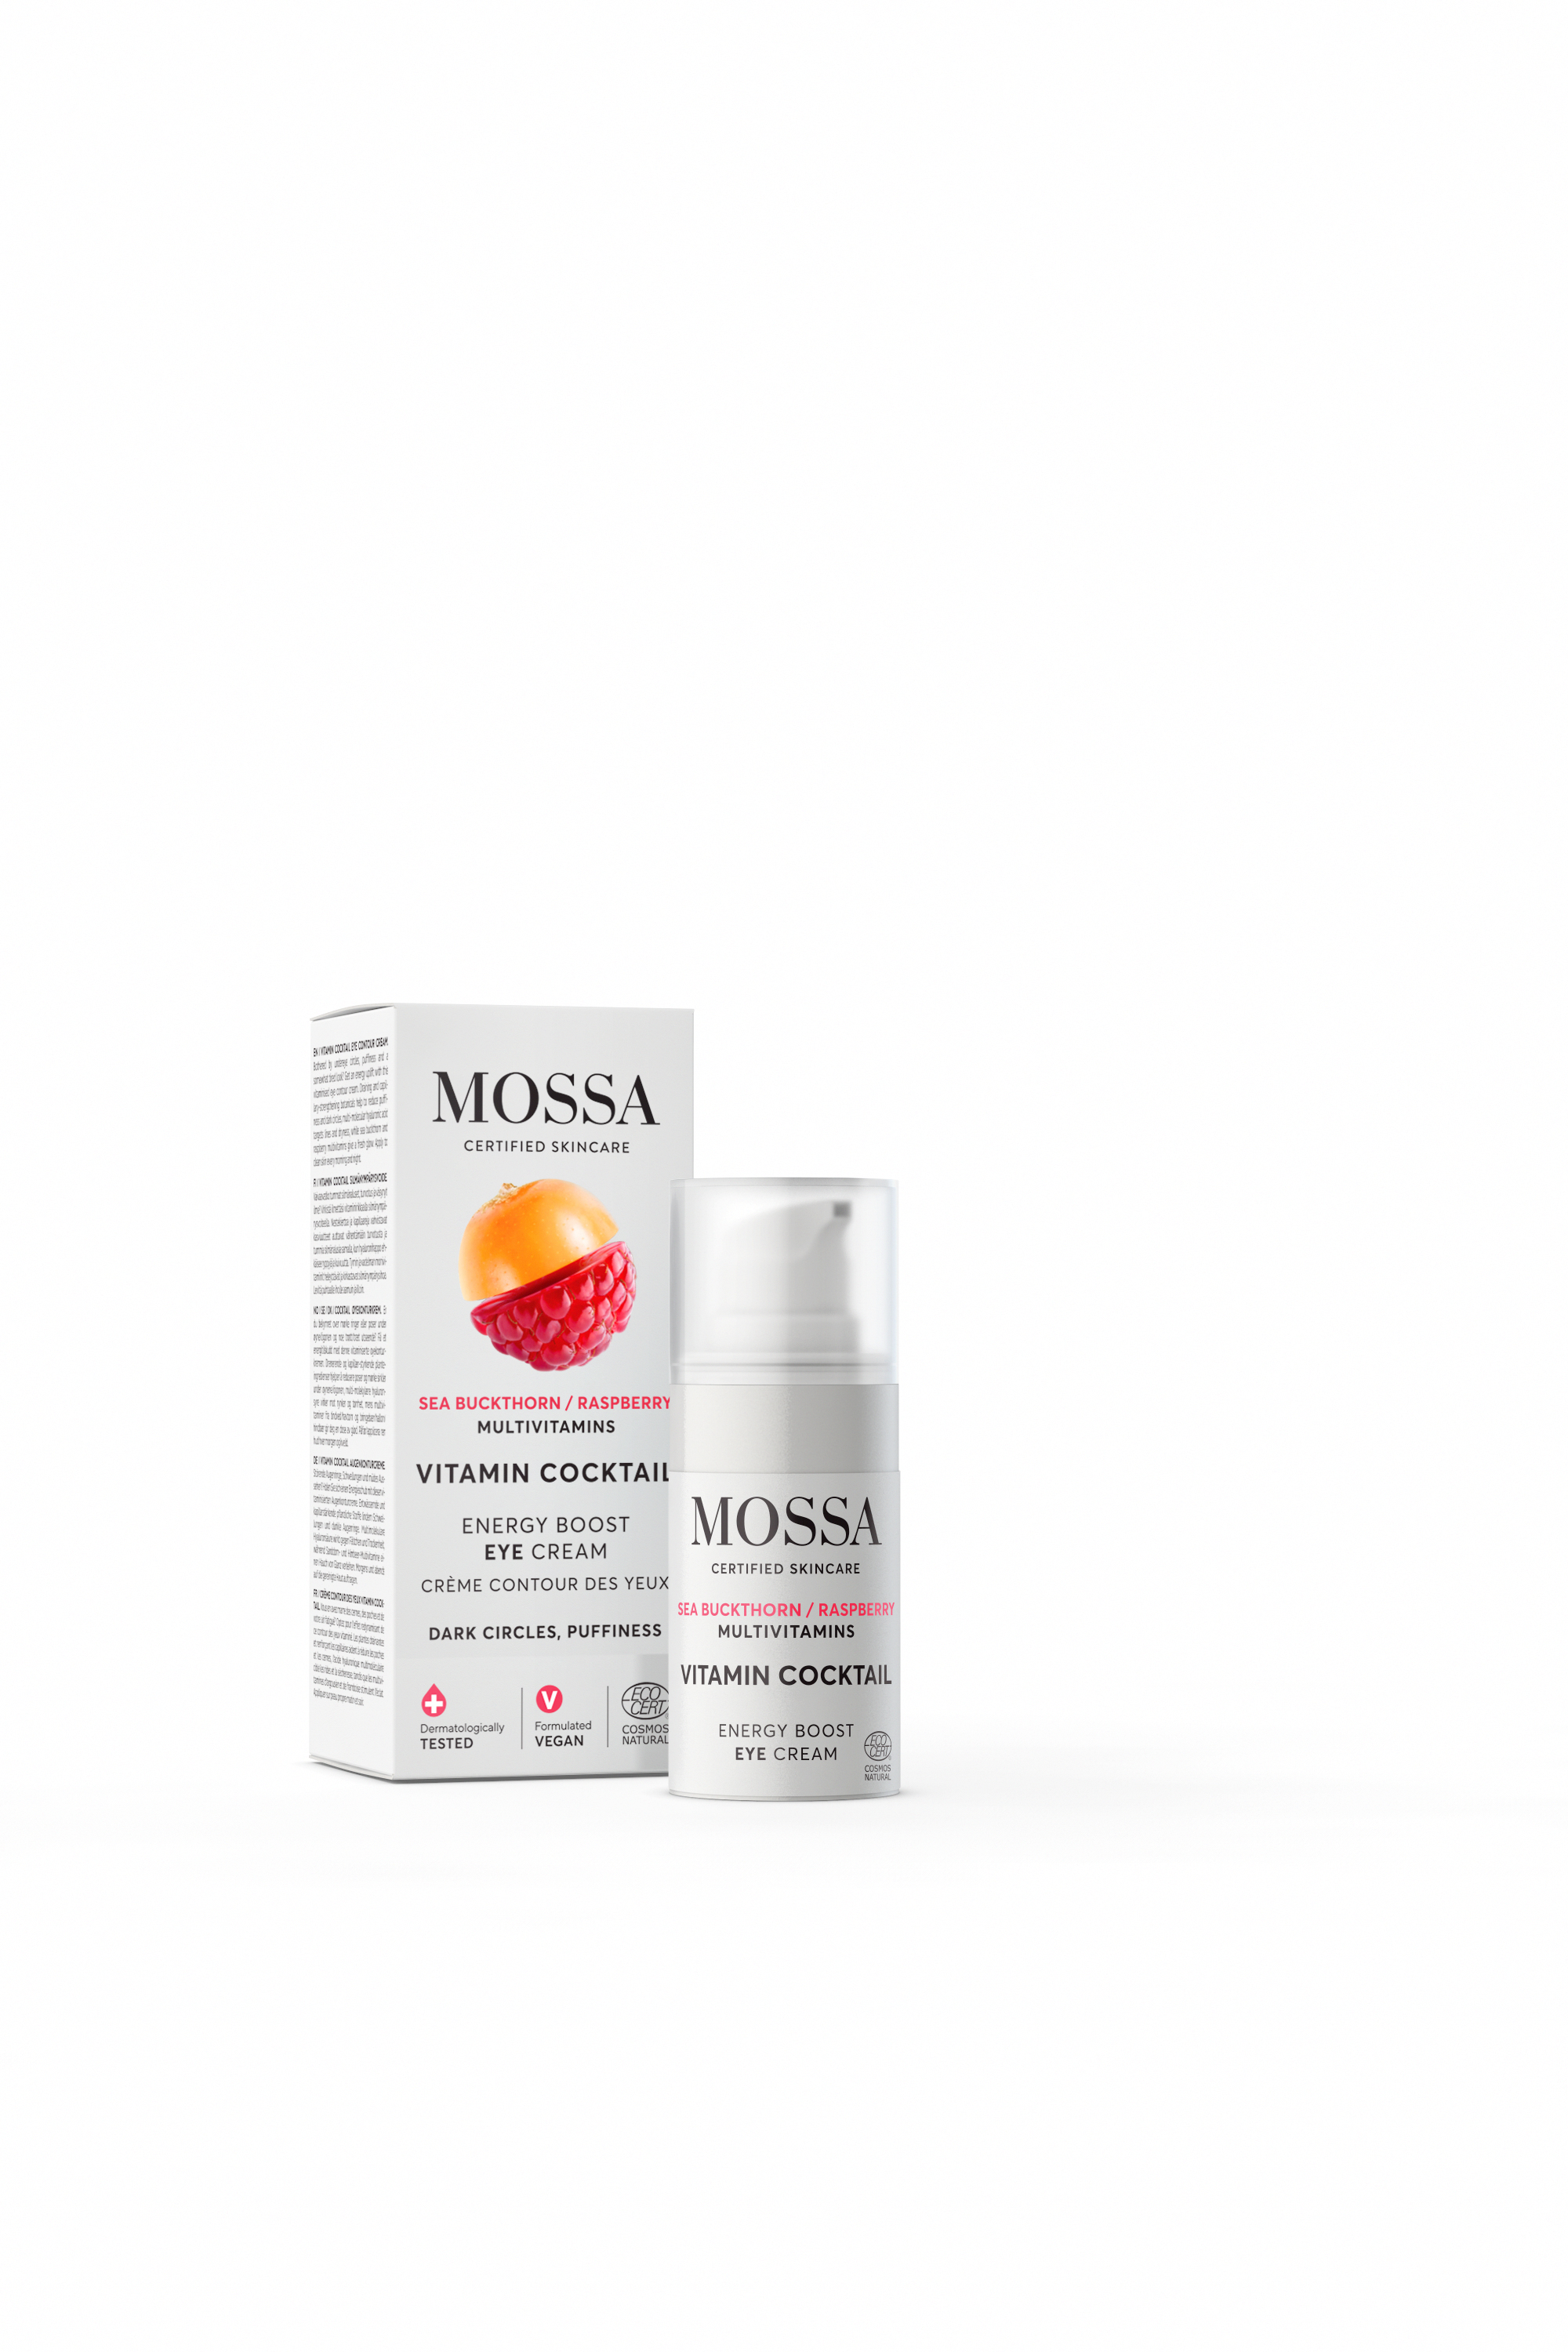 MOSSA Vitamin Cocktail Energy boost eye cream